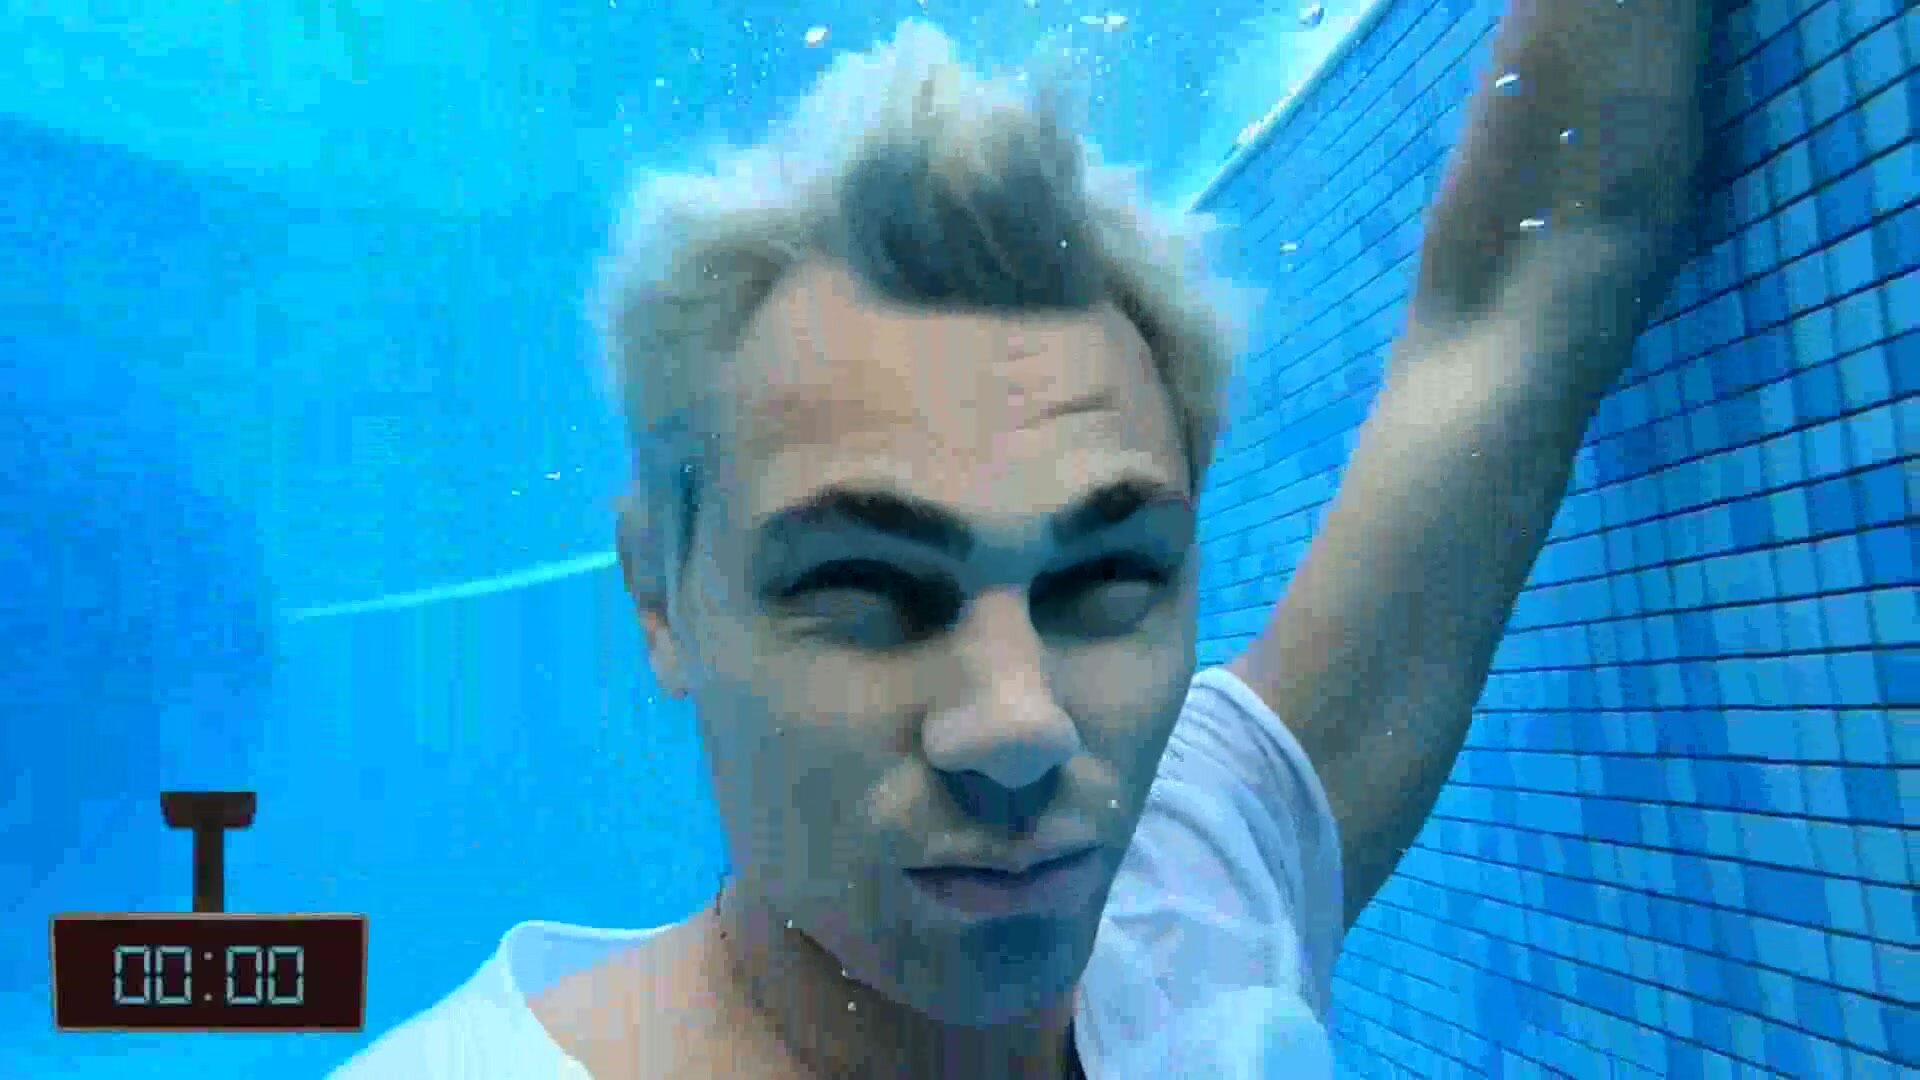 Bleached hair boy breatholds barefaced underwater - video 2